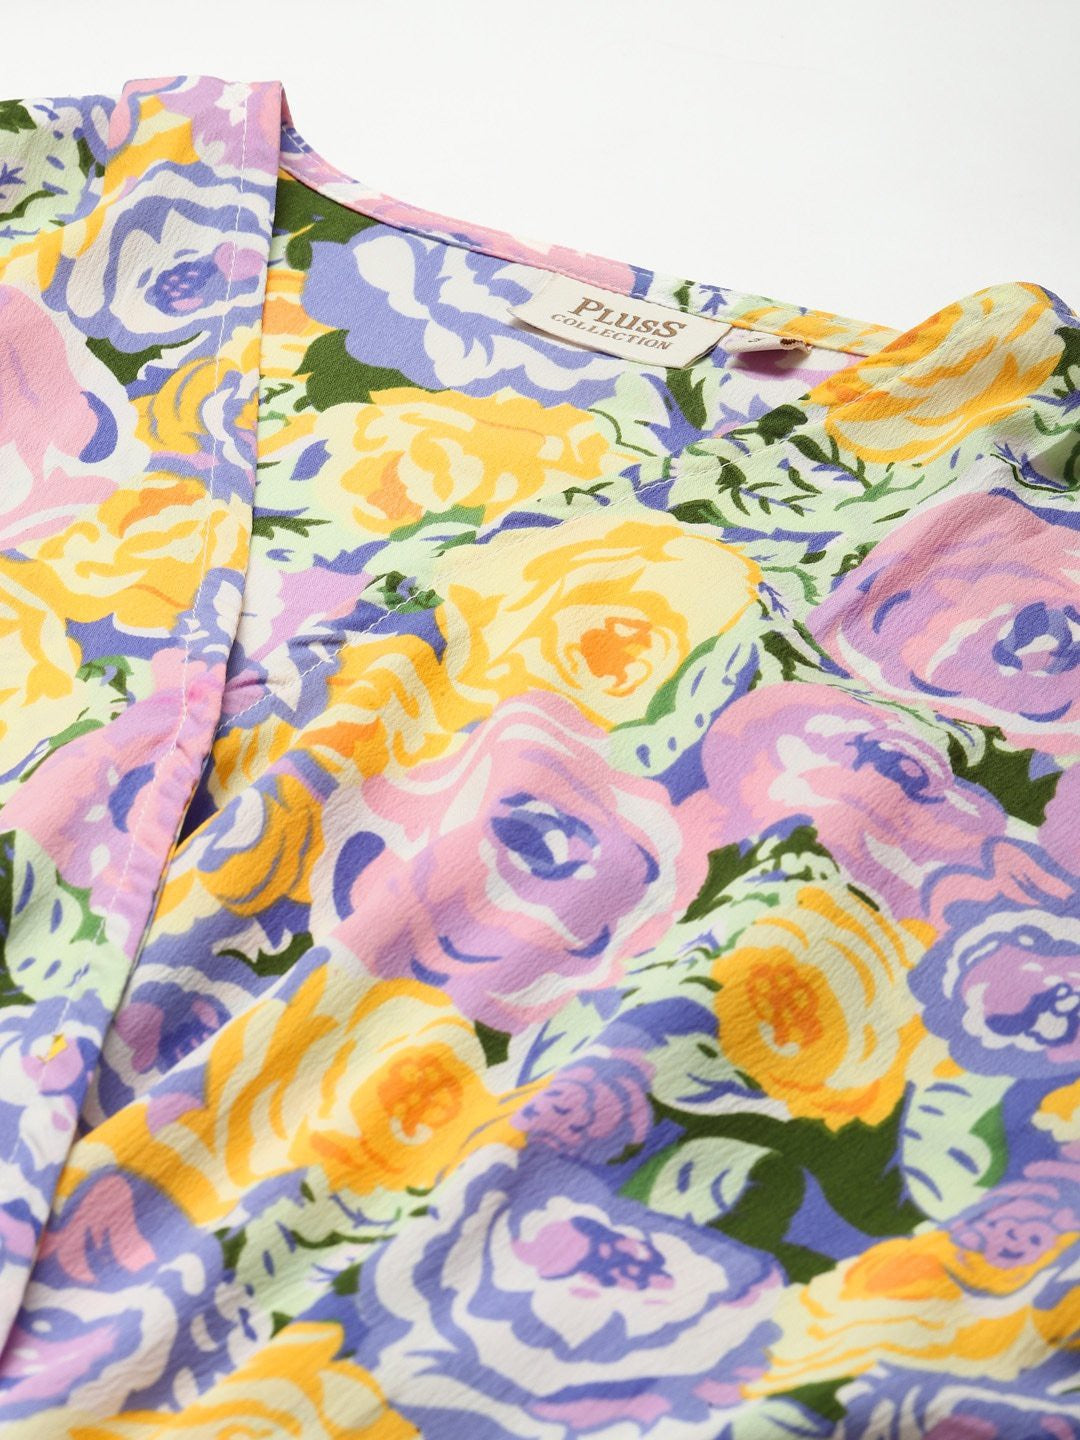 plusS Lavender  Yellow Floral Print Midi Dress